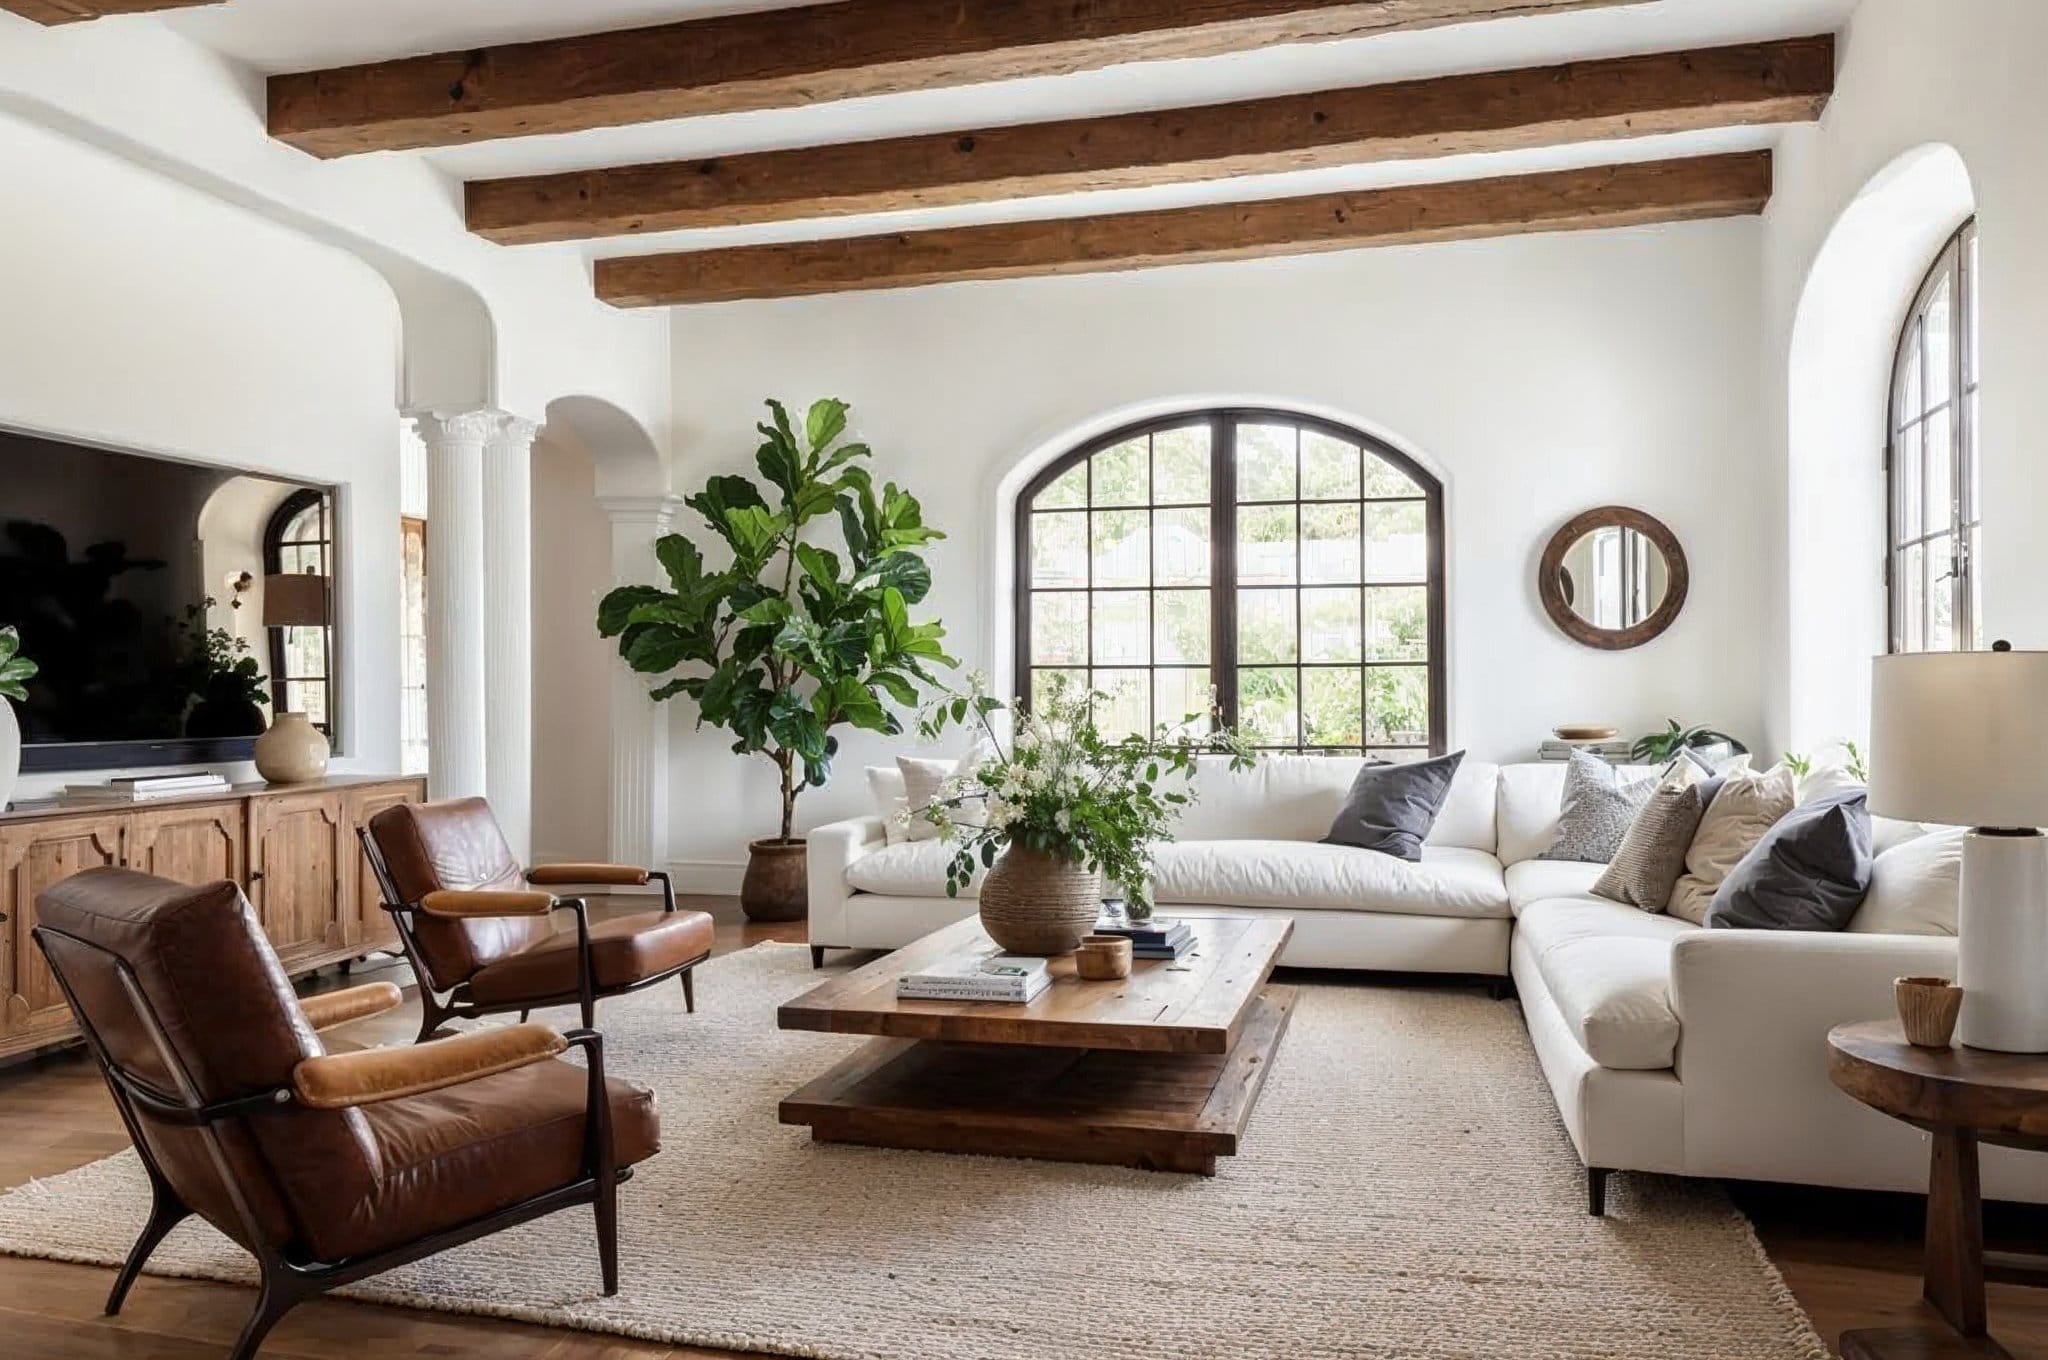 8 Luxurious Living Room Interior Design Ideas For Inspiration - Décor Aid